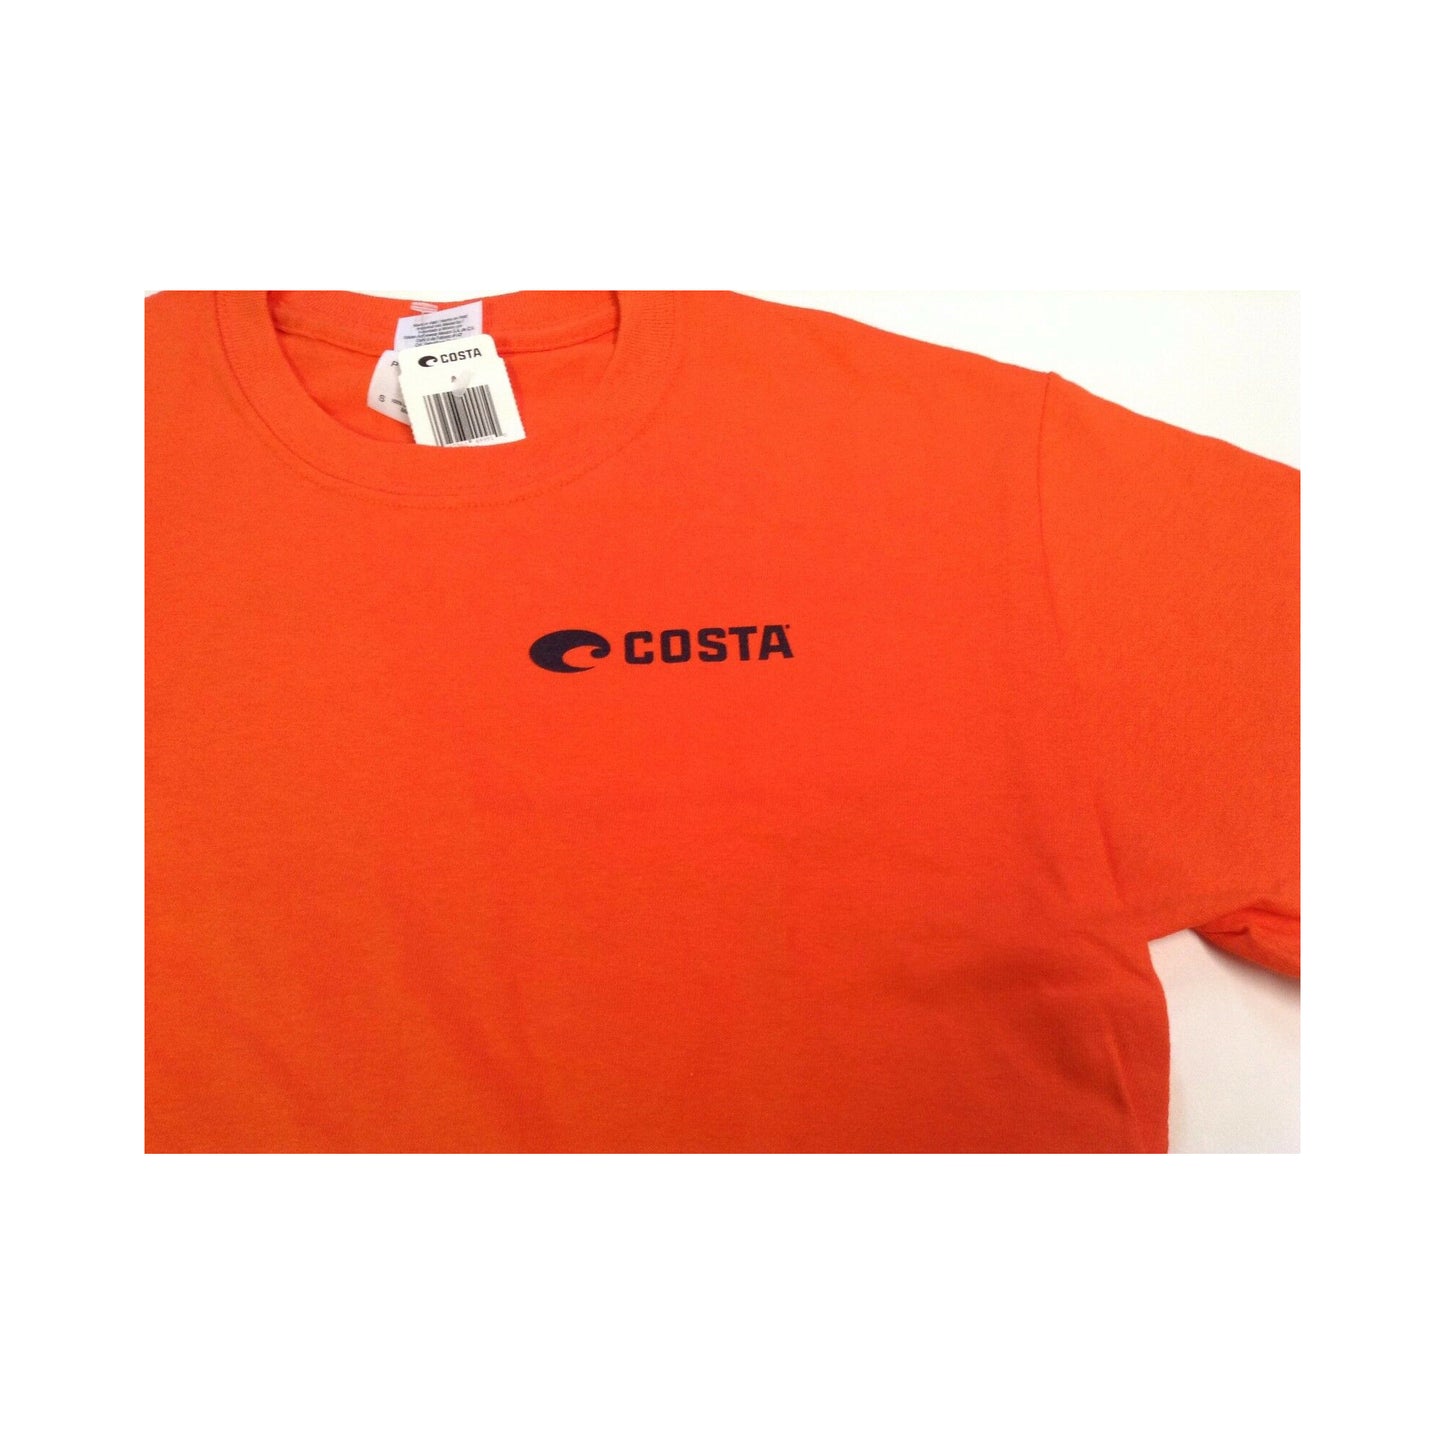 New Authentic Costa Short Sleeve T-Shirt Sailfish Orange Small